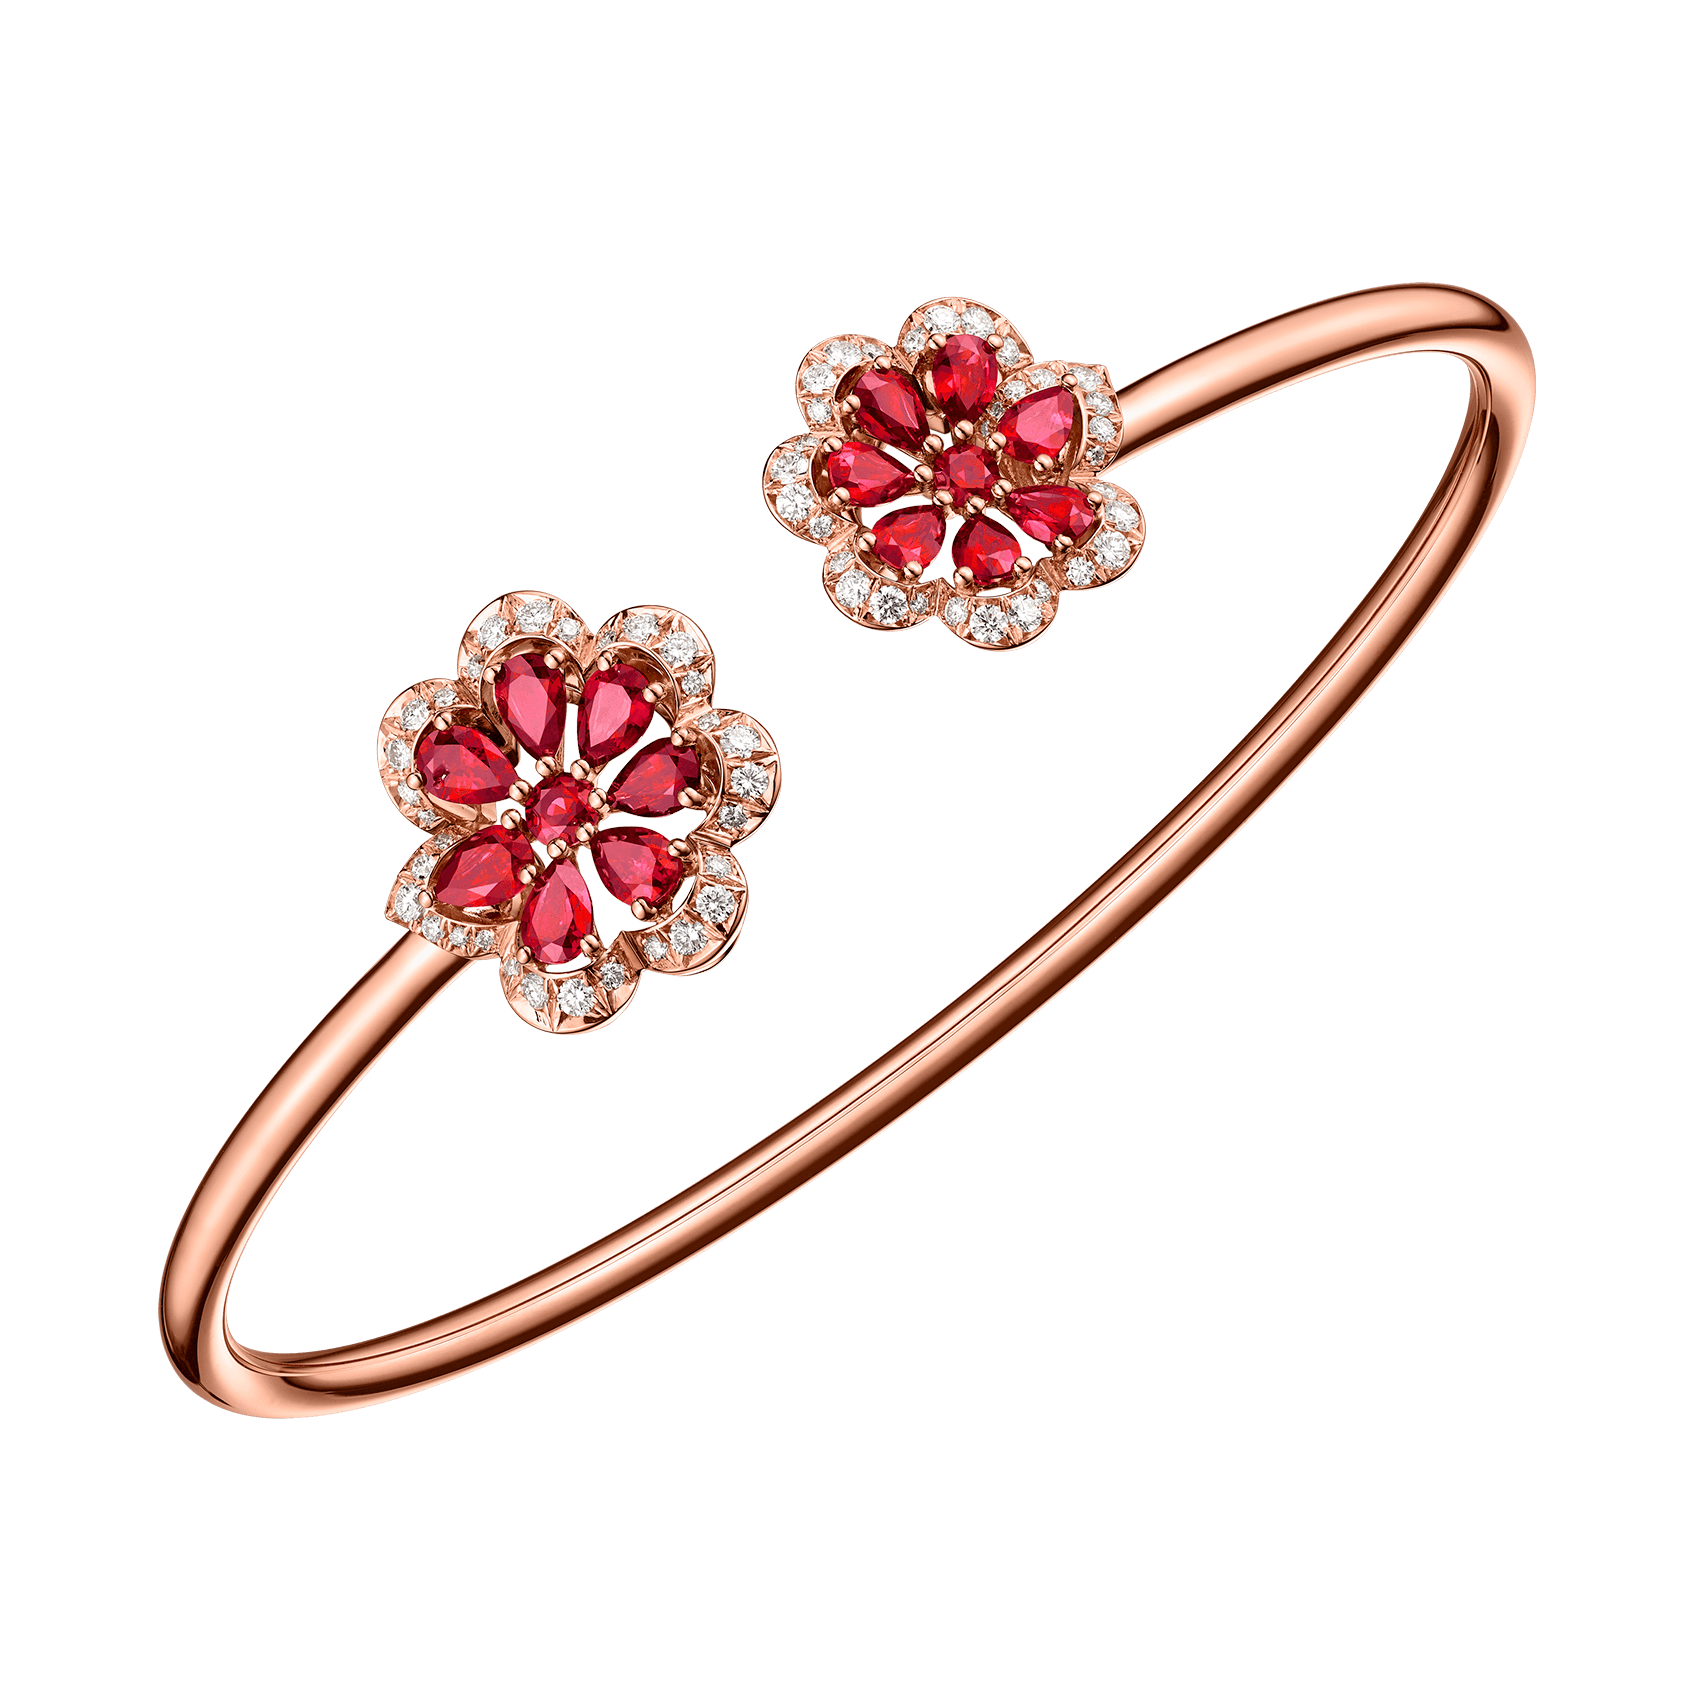 Chopard Jewelry: Precious Lace Ruby Mini Frou-Frou Bangle 858347-5007